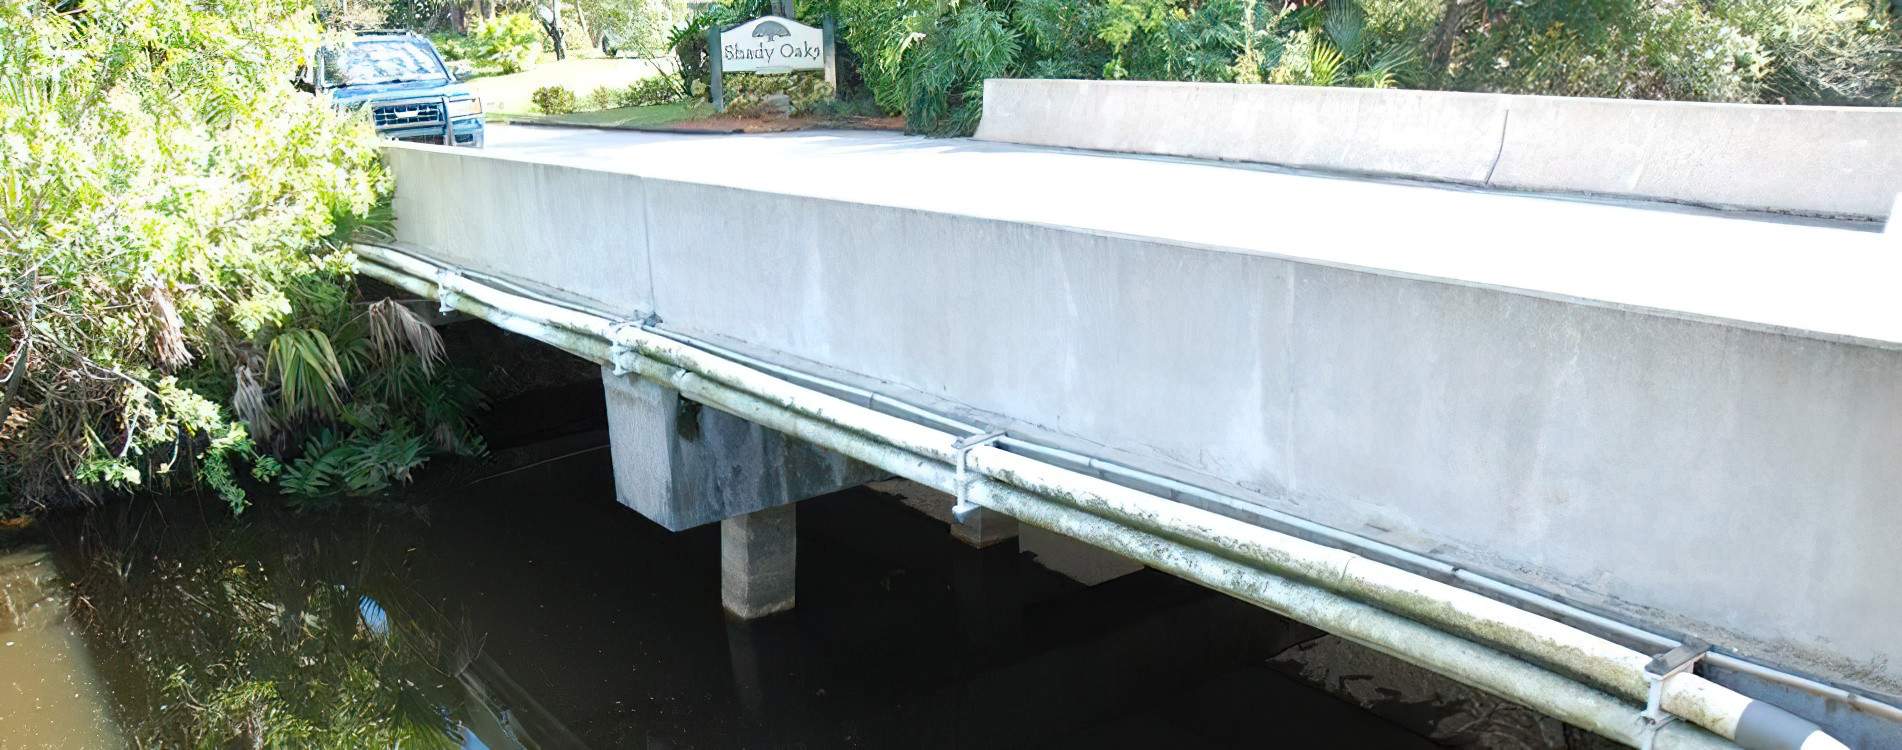 Shady Oaks Bridge Stabilization